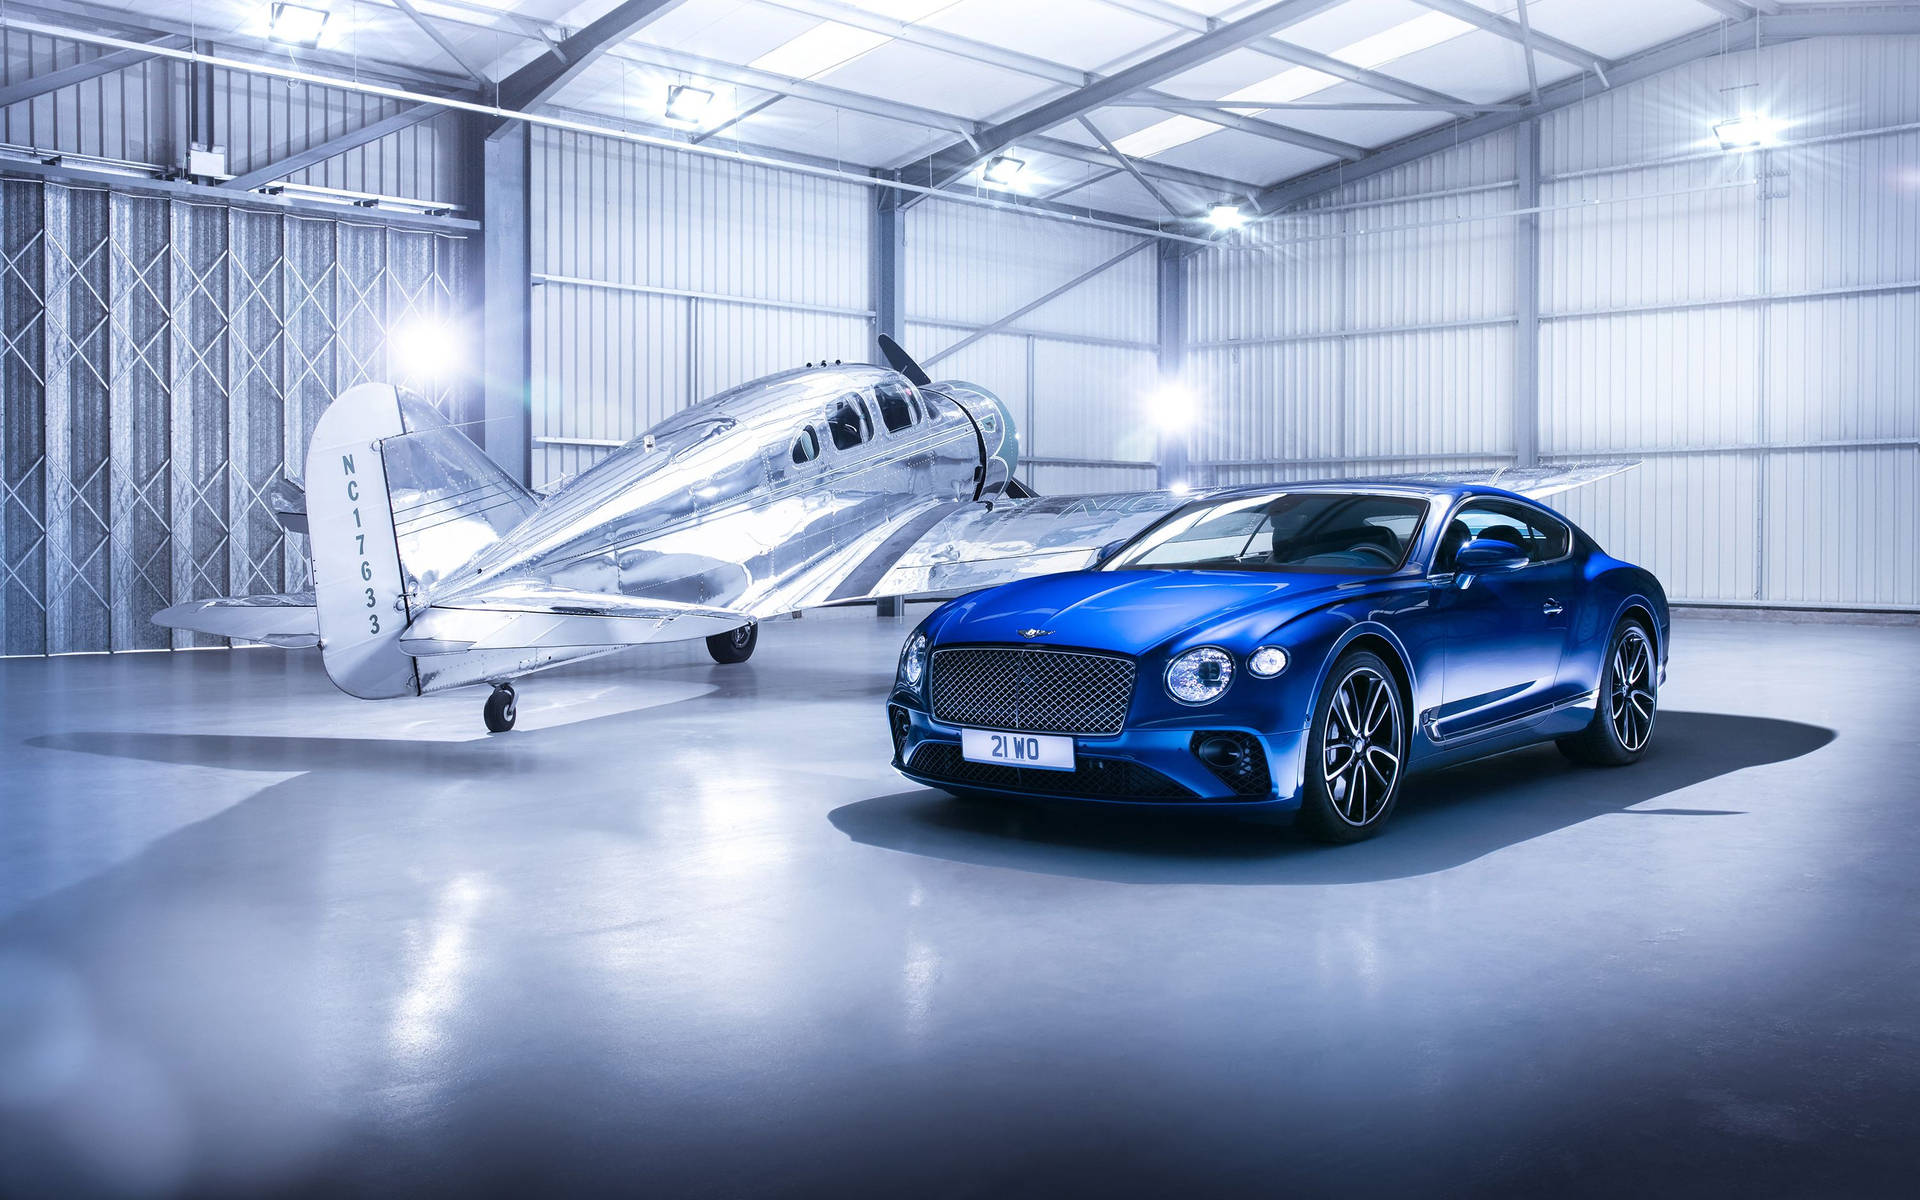 Bentley Luxury Car And Plane Background